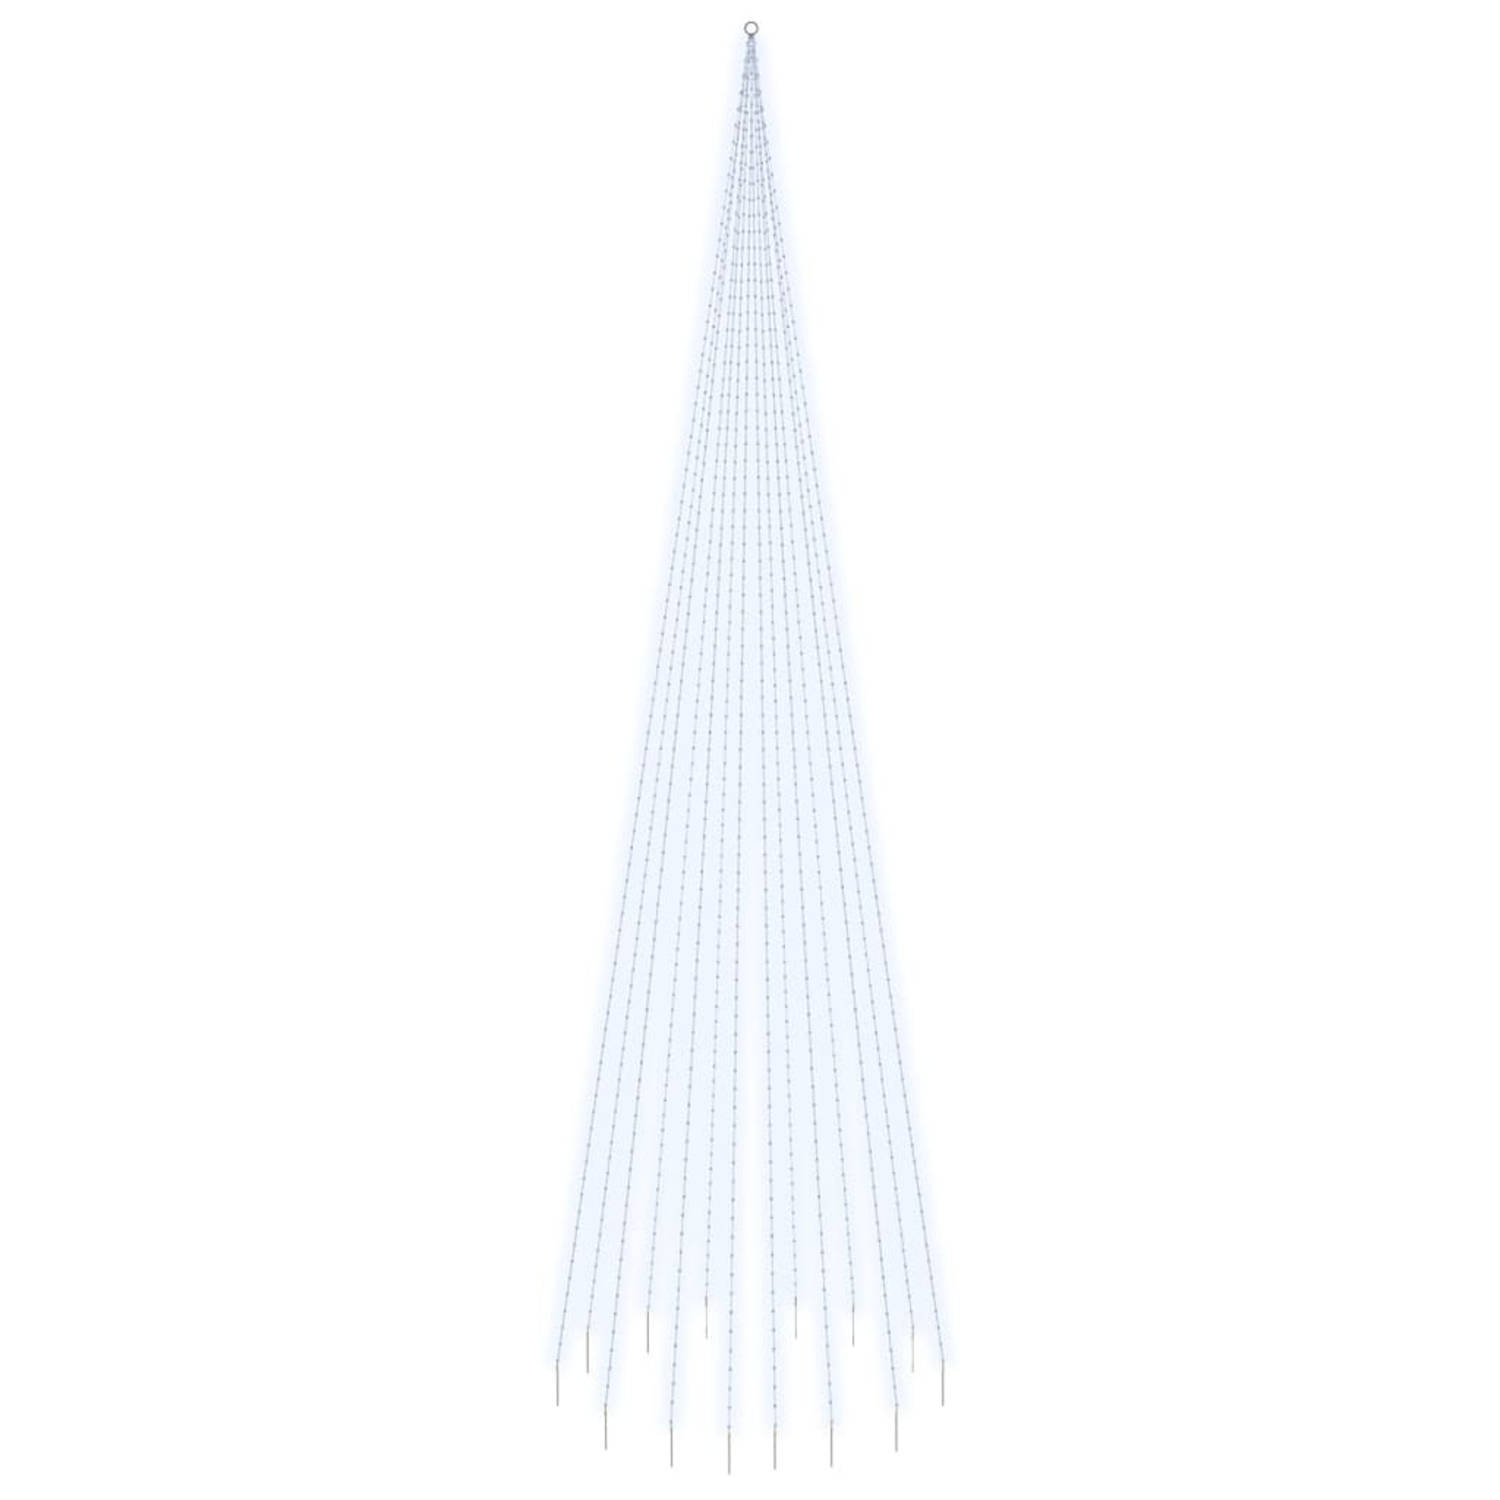 VidaXL vlaggenmast kerstboom 1134 LED's koudwit 800cm